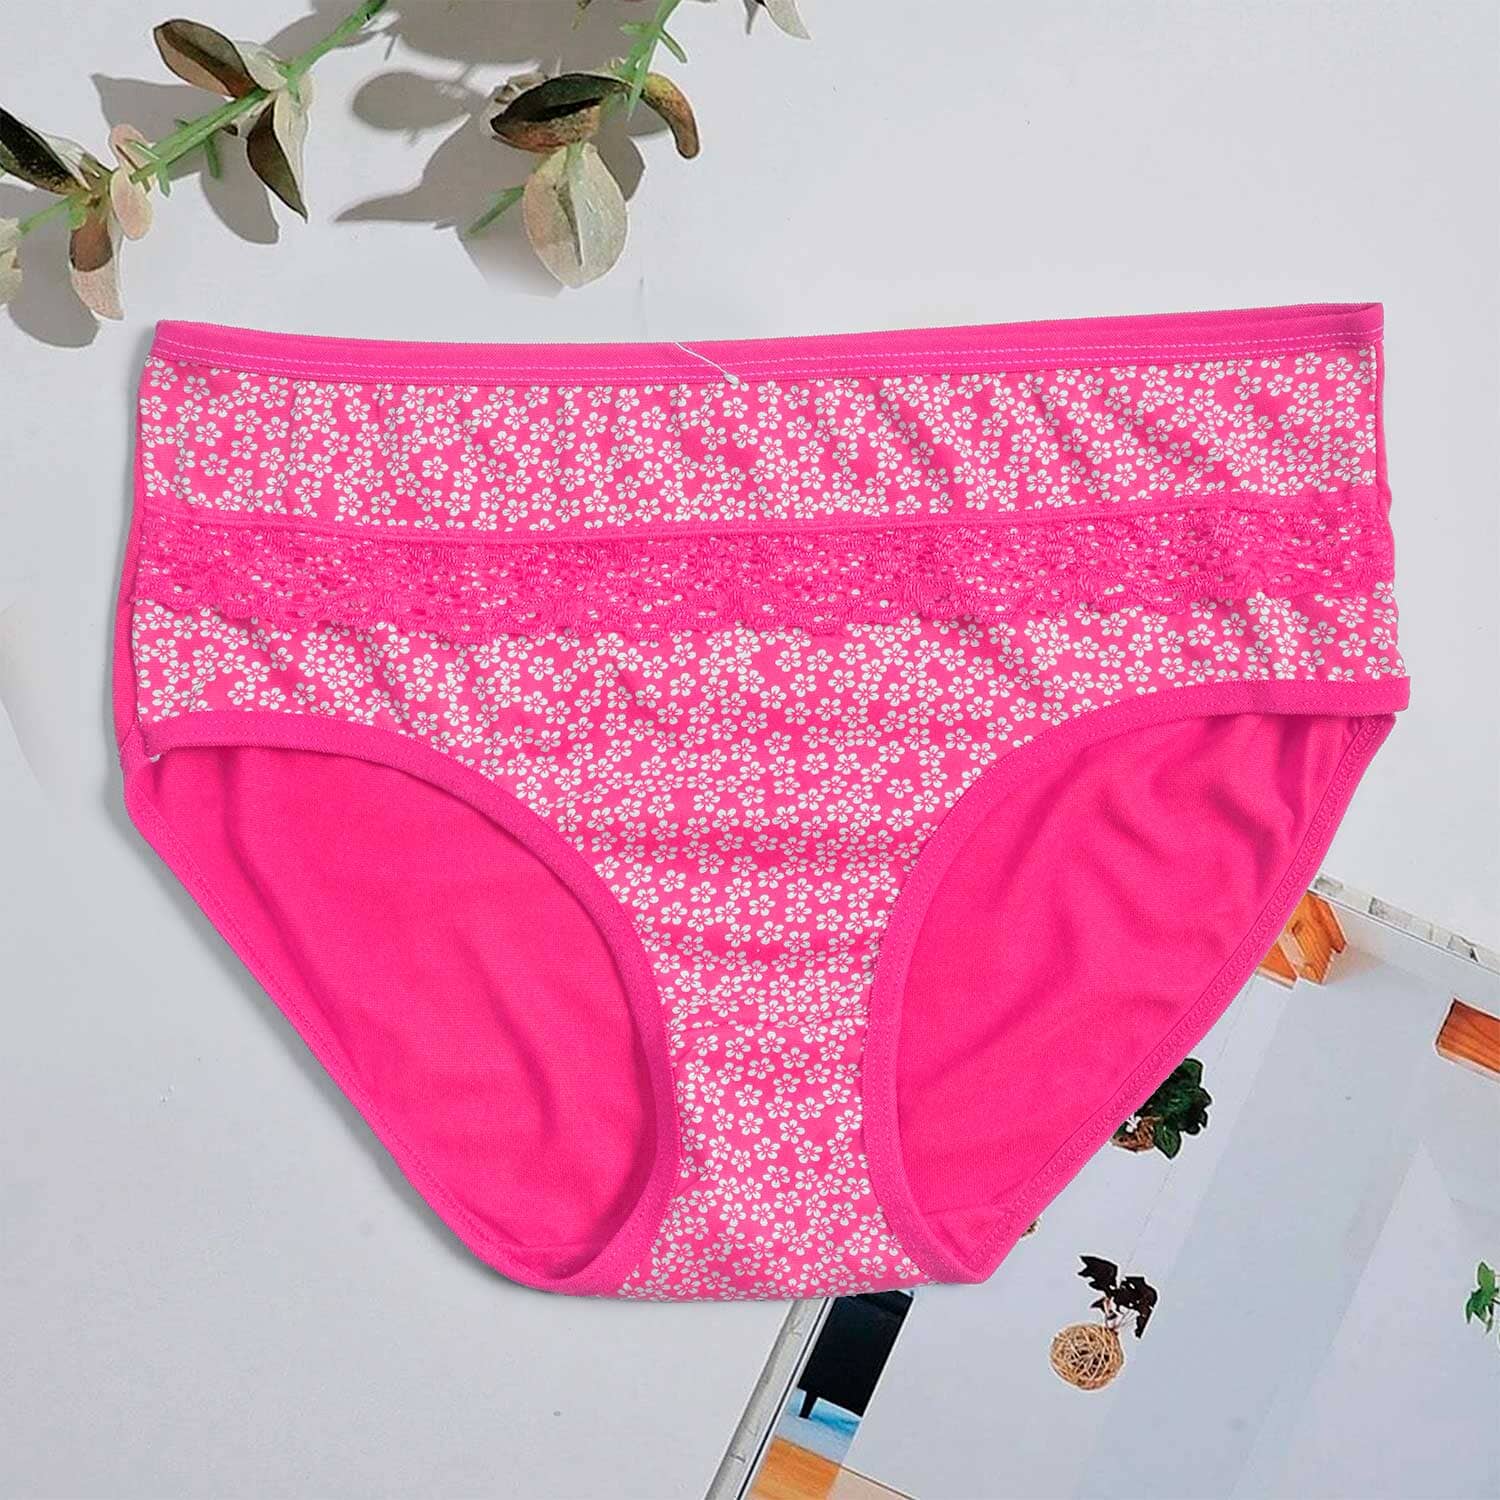 Yindanya Women's Floral Pattern Underwear Panties Women's Lingerie SRL Hot Pink 28-34 